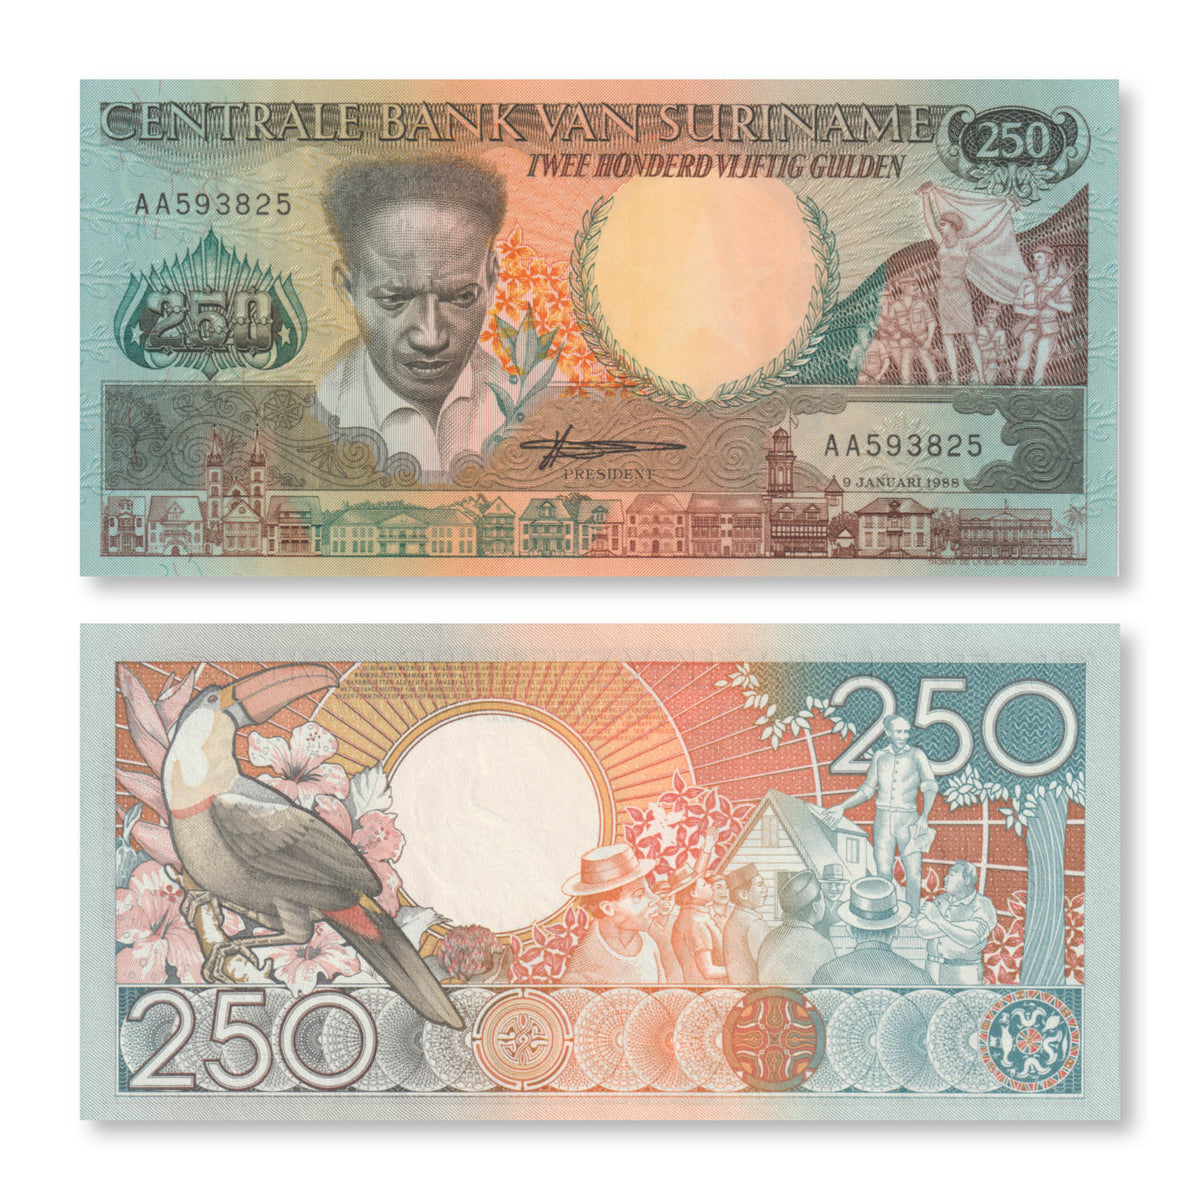 Suriname 250 Gulden, 1988, B520a, P134, UNC - Robert's World Money - World Banknotes